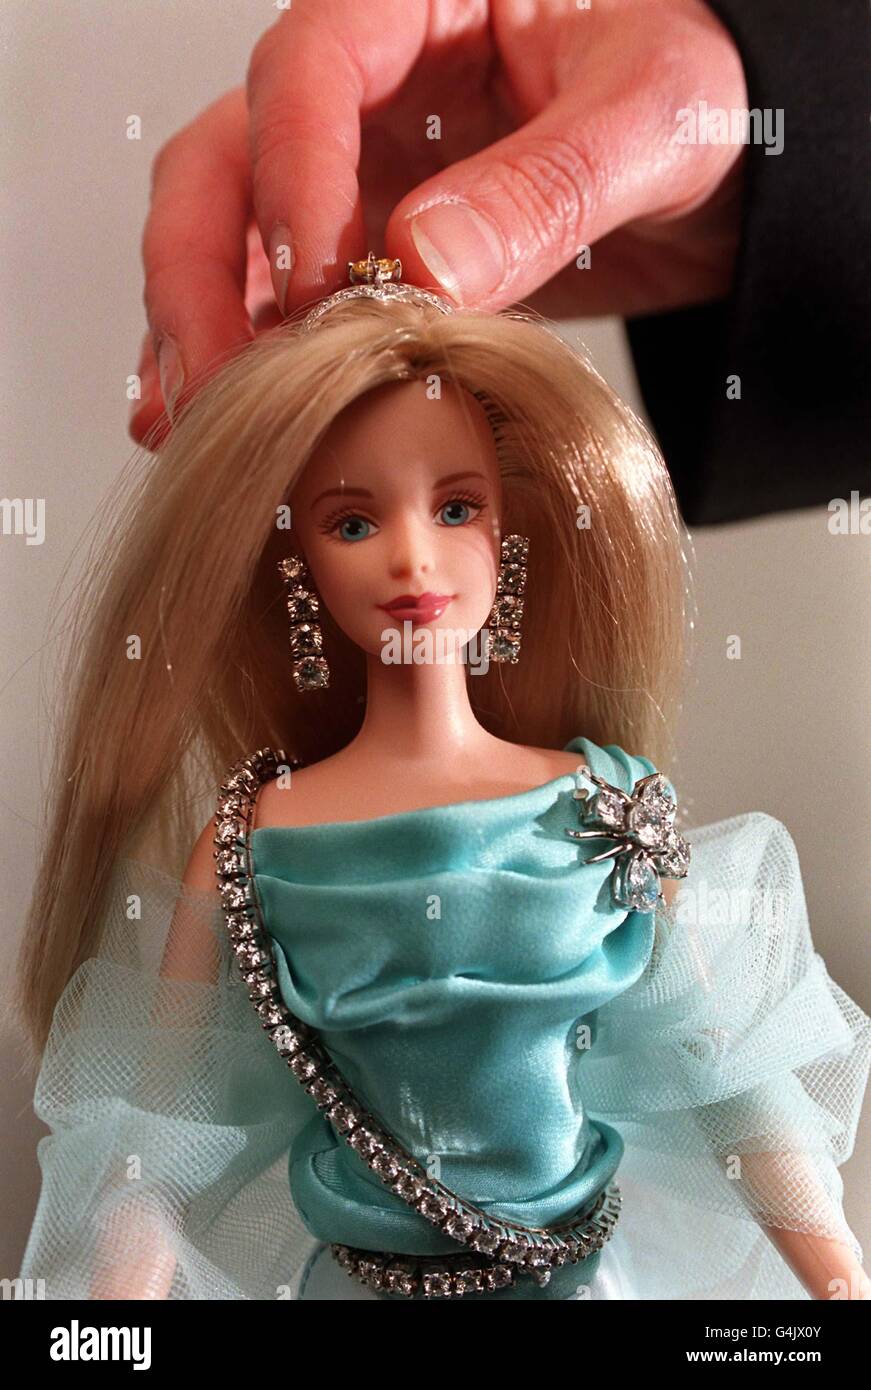 Diamond Barbie/40th birthday Stock Photo - Alamy